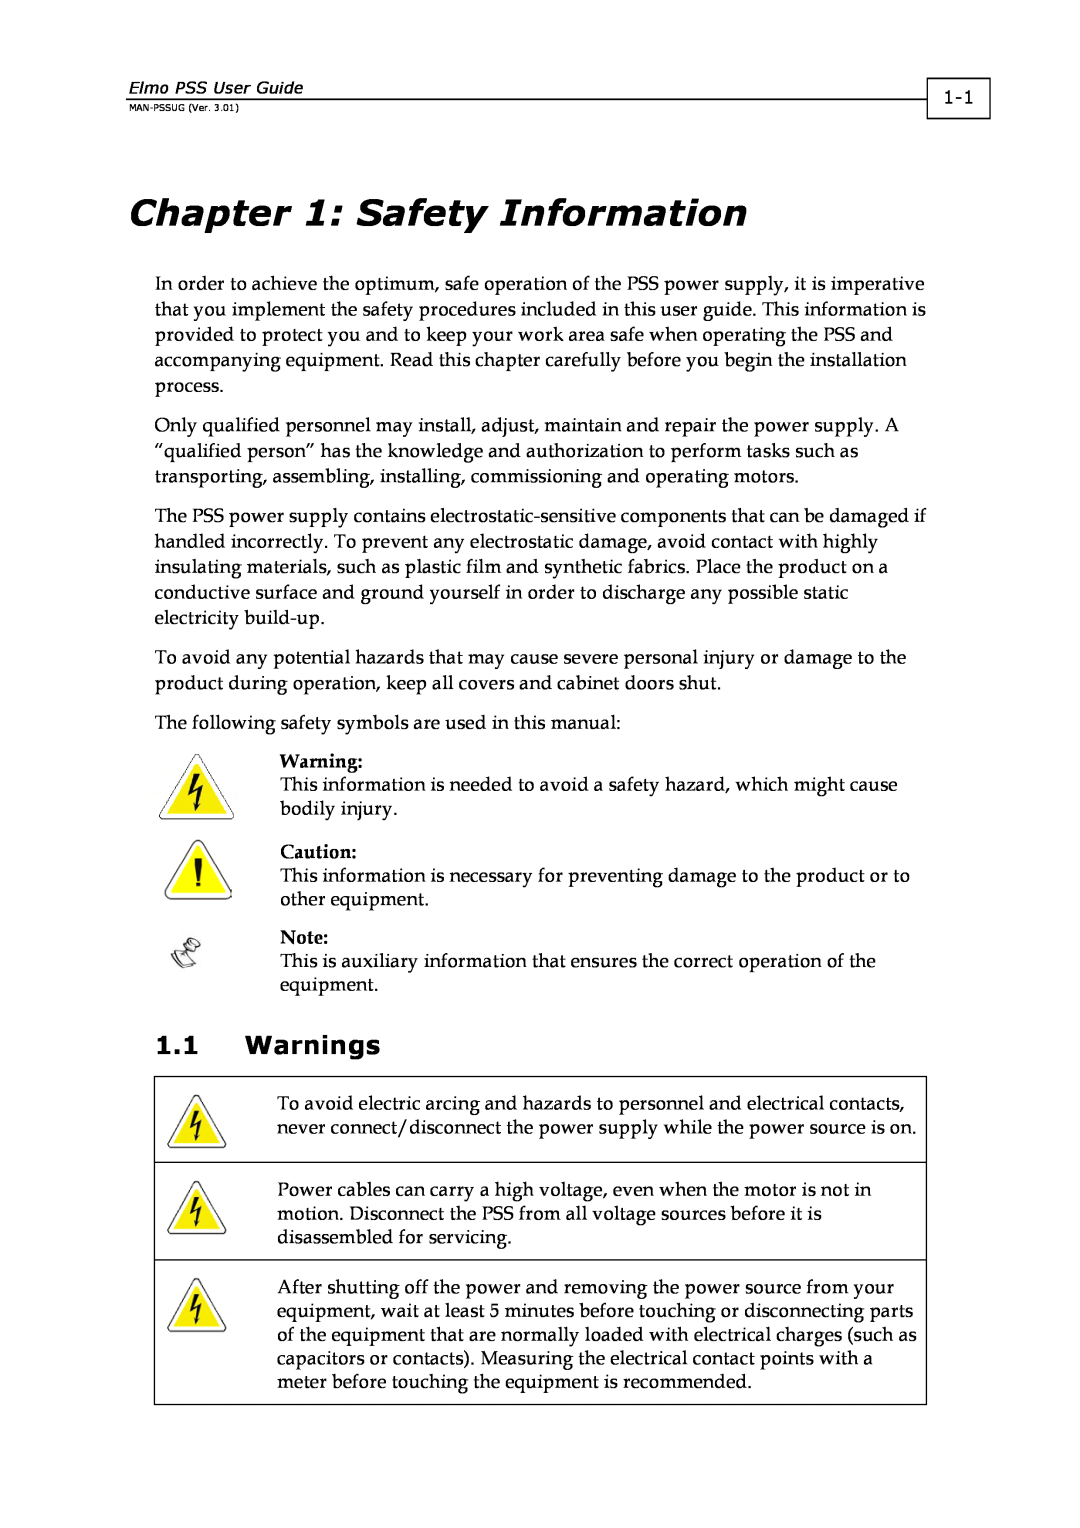 Elmo PSS 3U, PSS 6U manual Safety Information, Warnings 